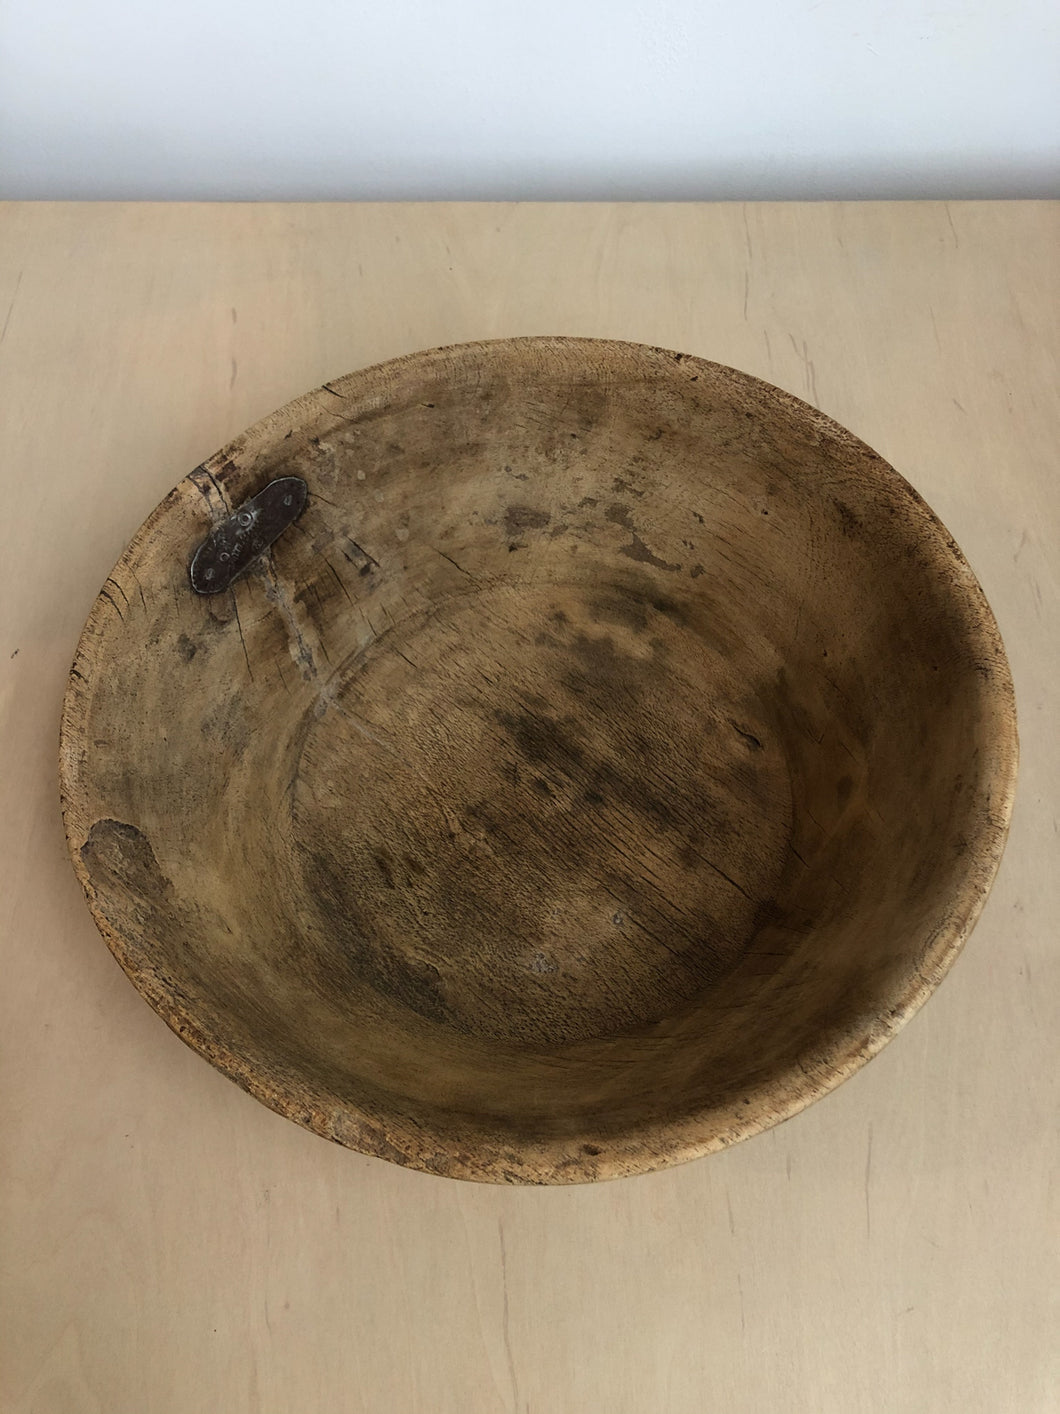 Early Vintage Primitive Wood Bowl